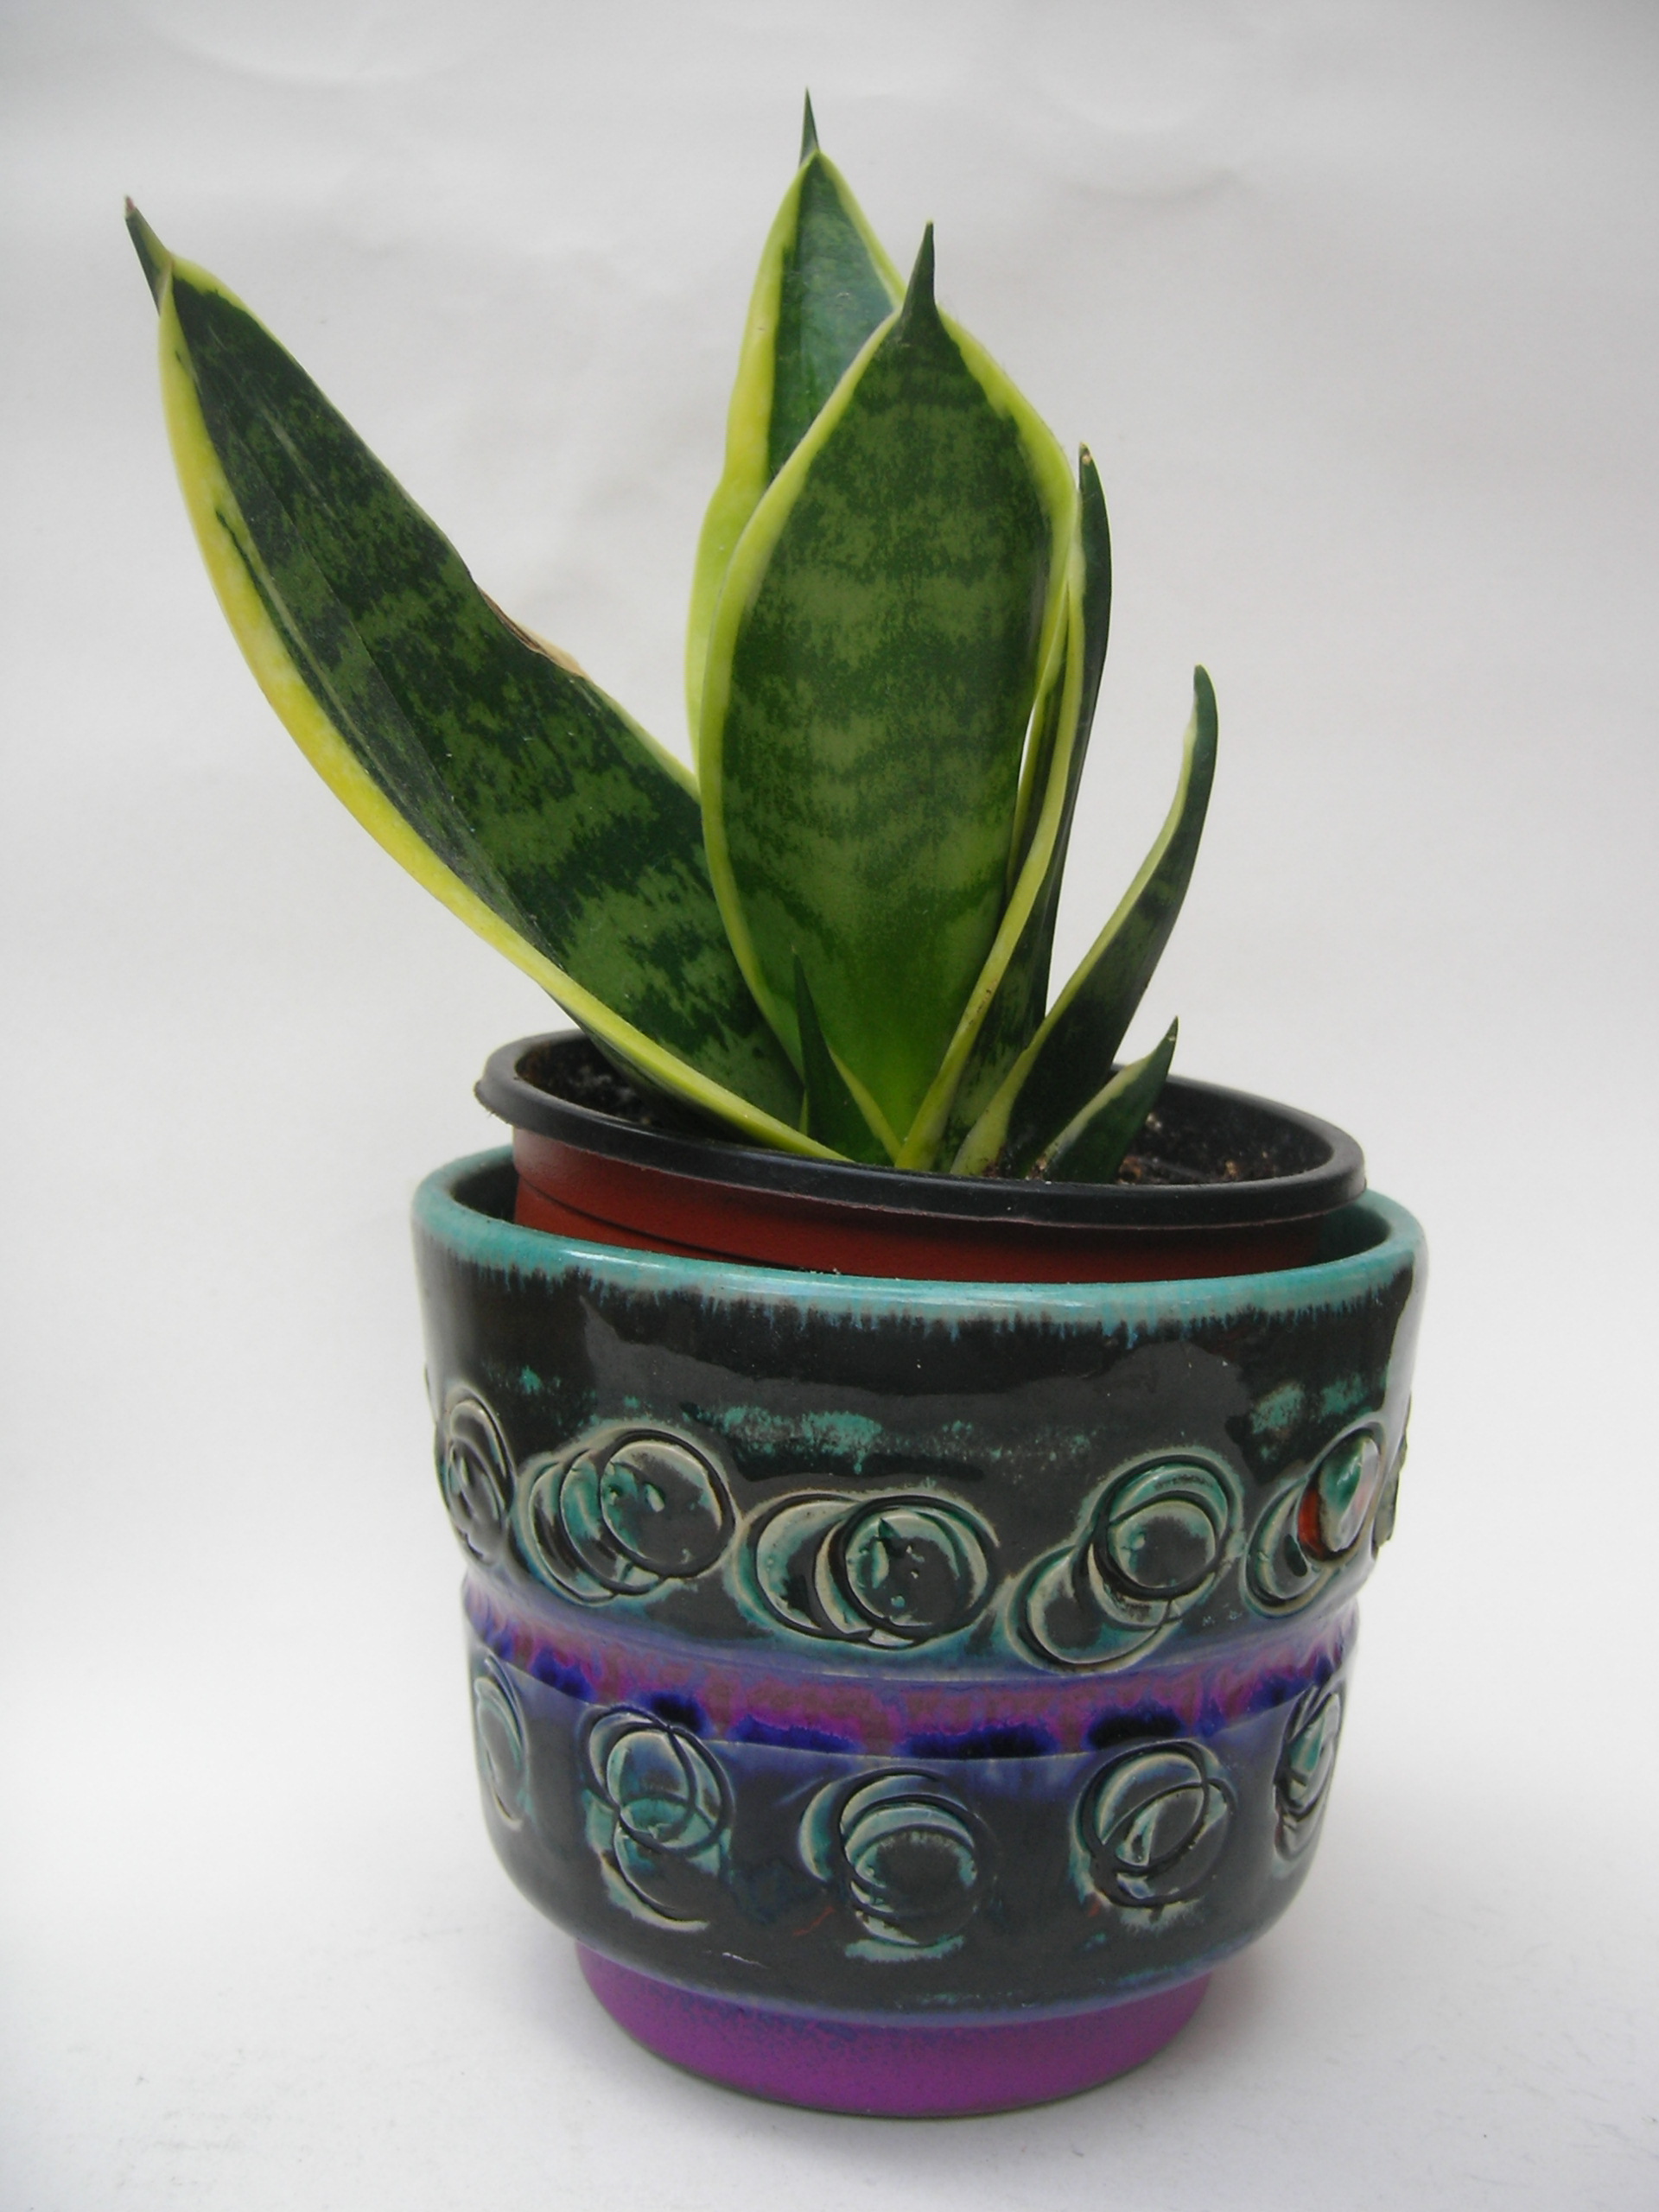 Spara Keramik Plant Pot West German Cacti